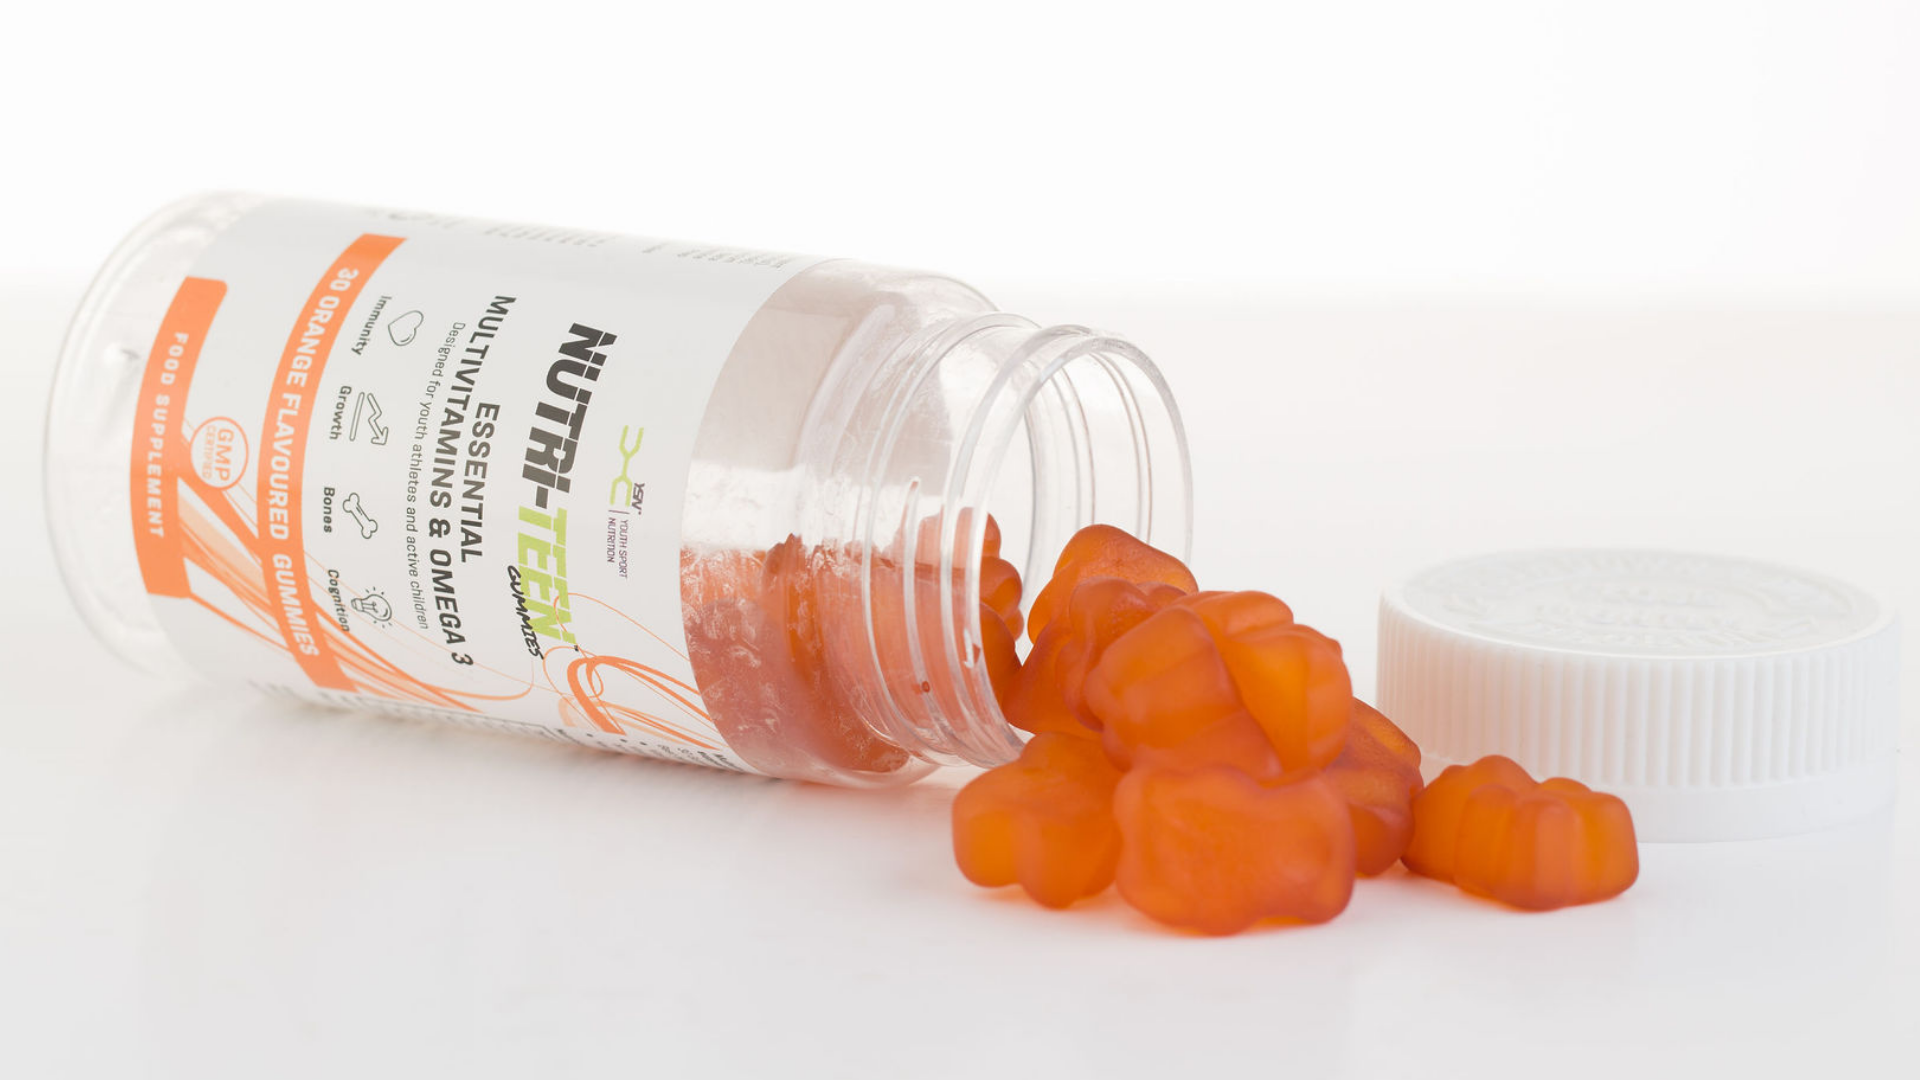 NUTRI-TEEN Multivitamin and Omega-3 Gummy Bears